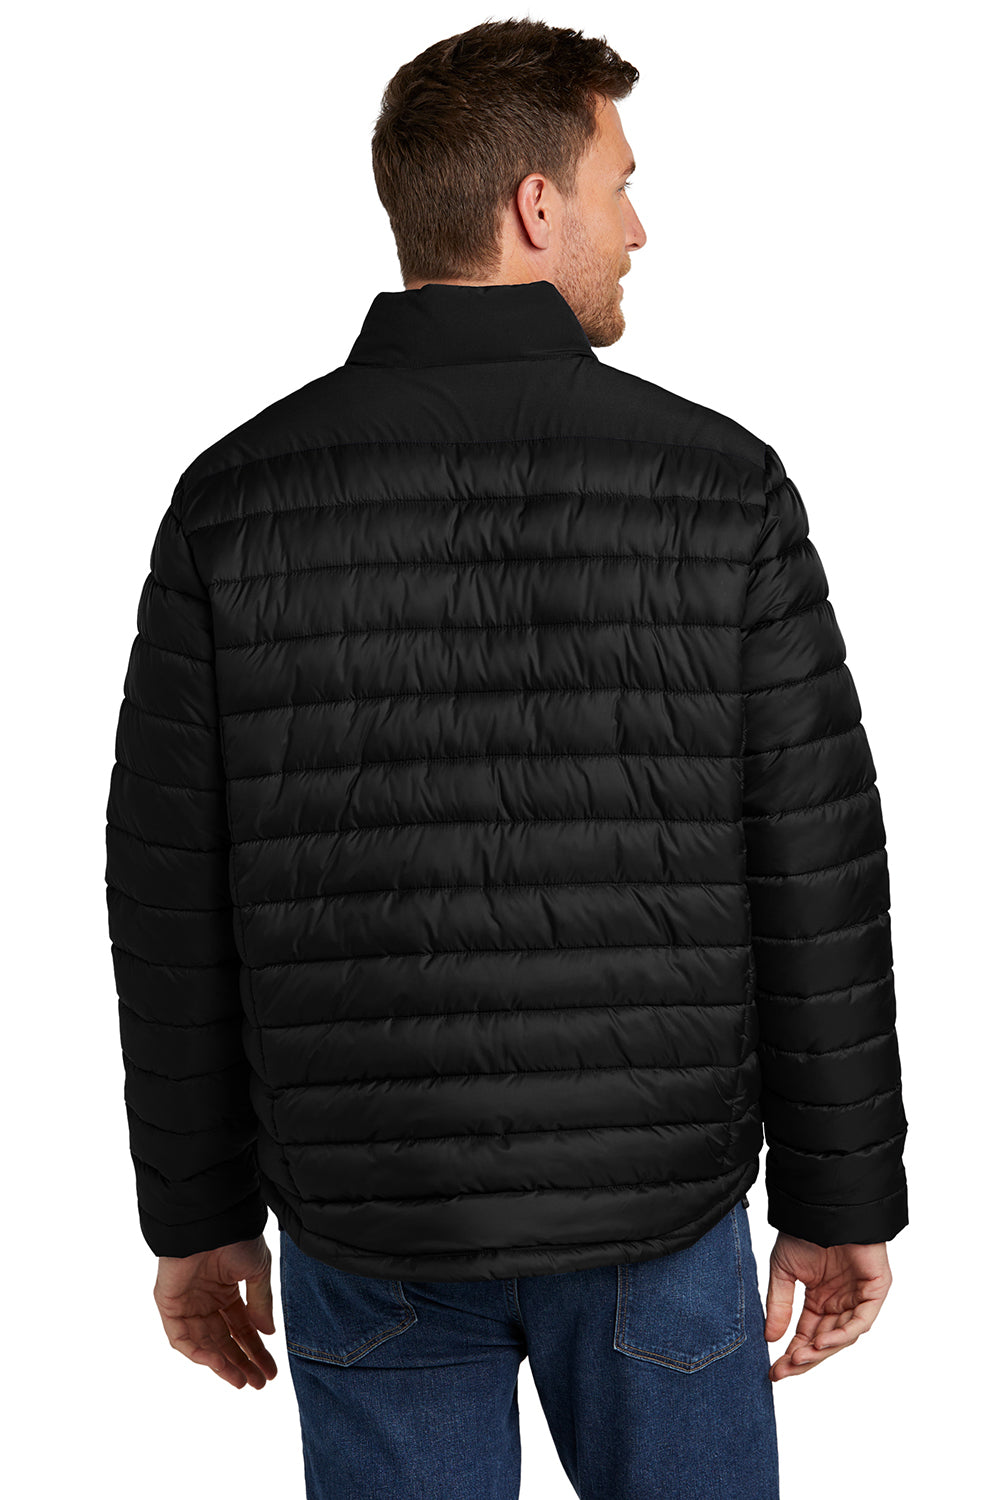 Port Authority J364 Mens Horizon Full Zip Puffy Jacket Deep Black Back